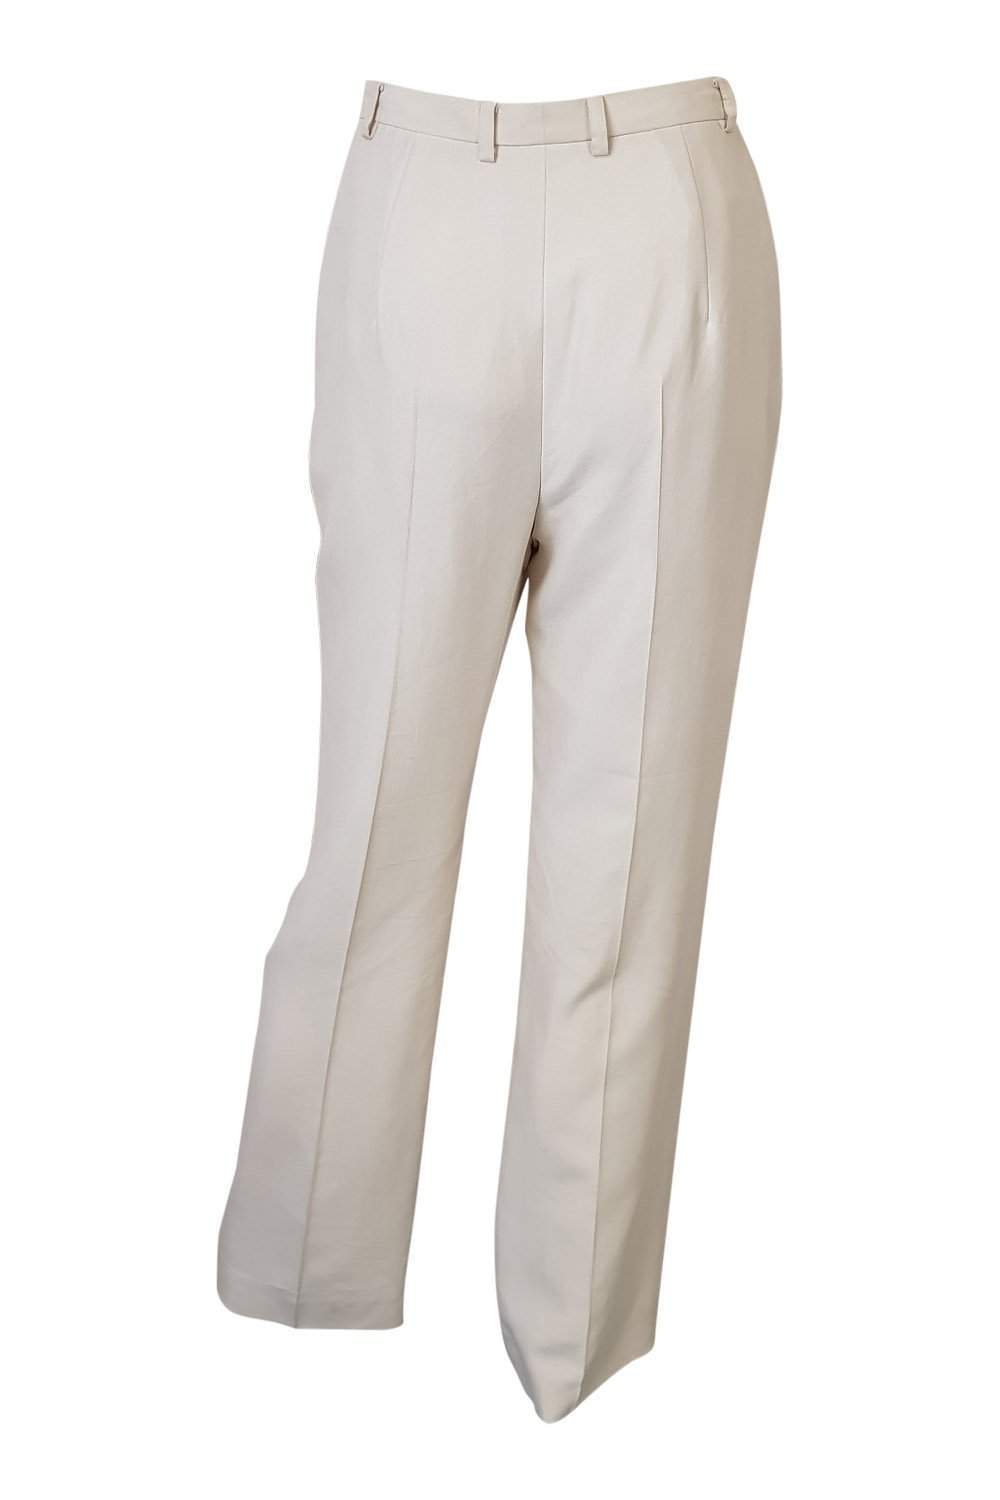 CERRUTI 1881 Cream Silk and Shell Tuxedo Style Trousers (44)-Cerruti-The Freperie